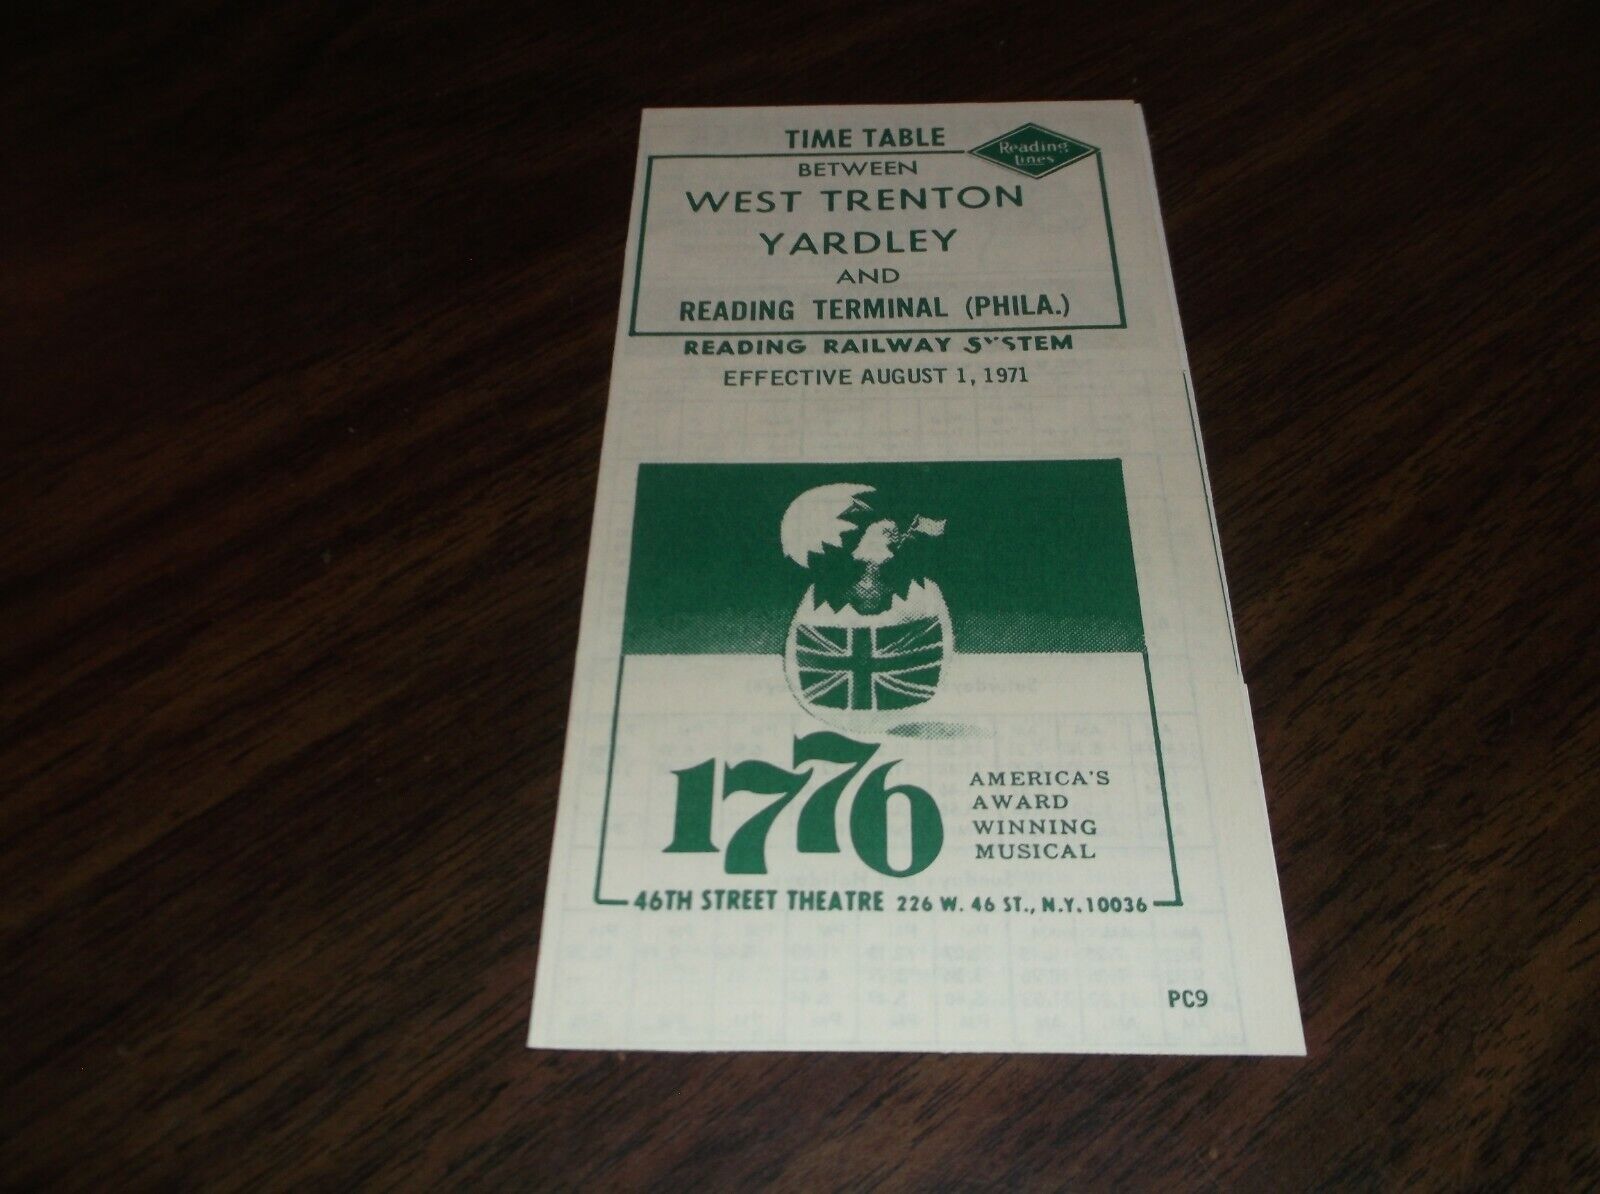 AUGUST 1971 RDG READING COMPANY WEST TRENTON YARDLEY, PA  PC9 PUBLIC TIMETABLE